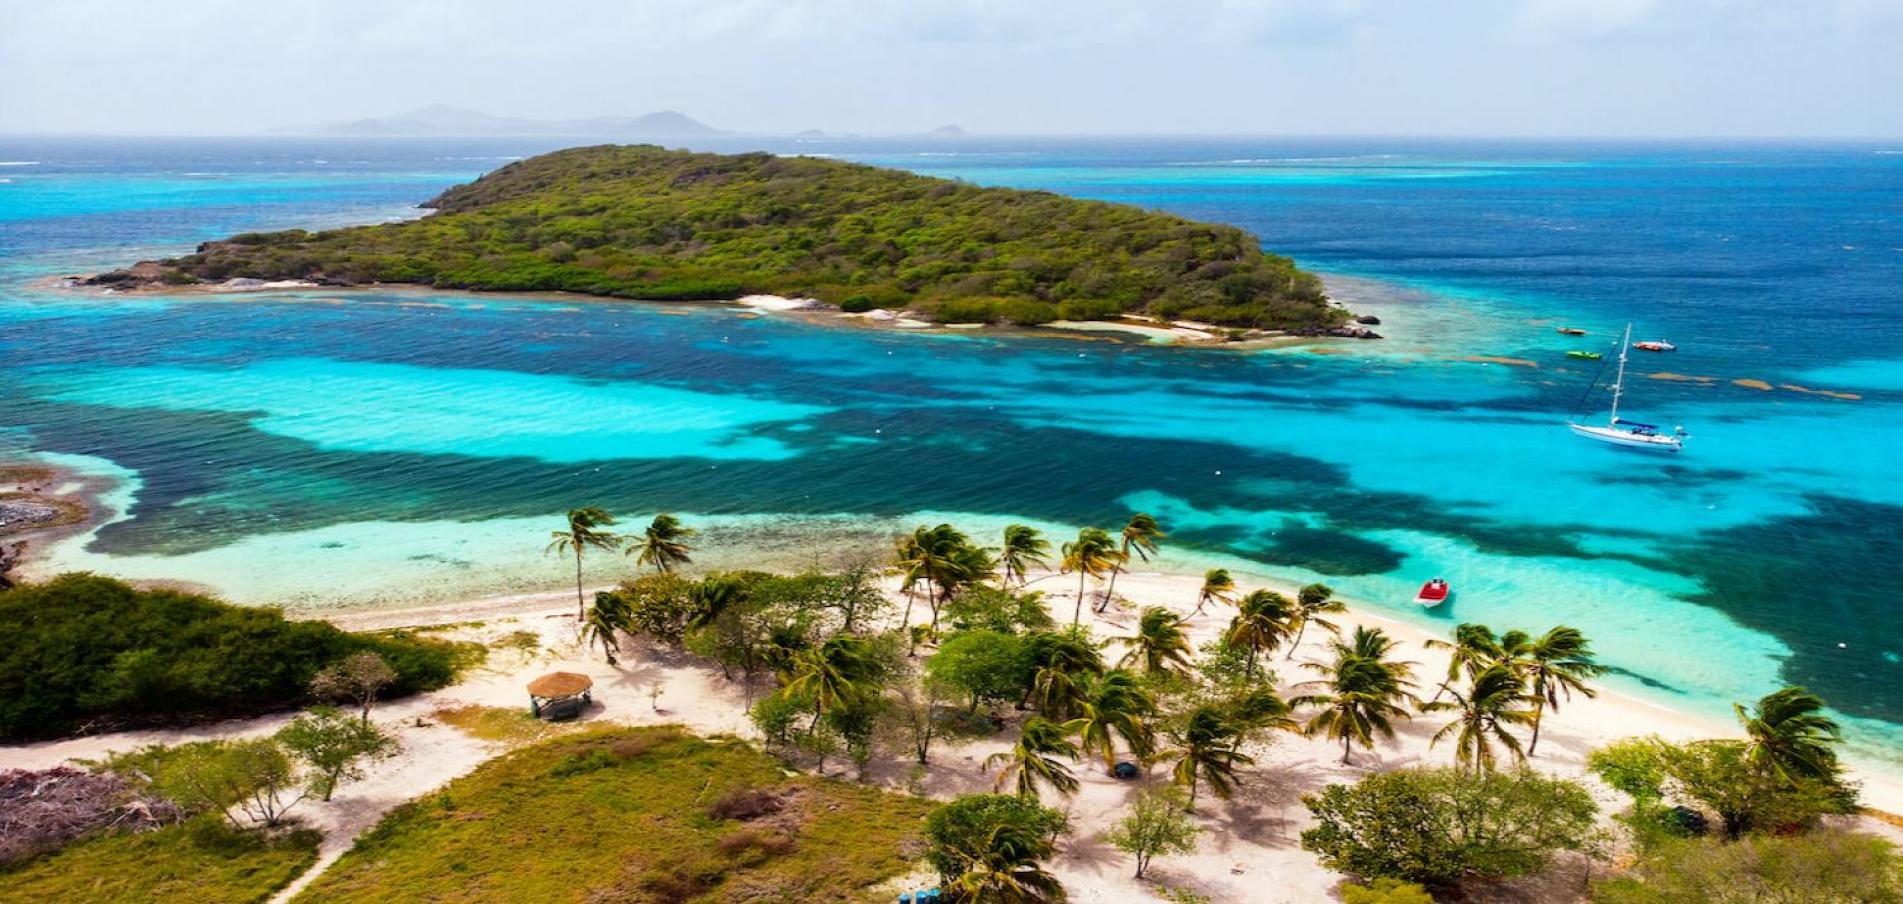 Location de yacht de luxe Caraibes